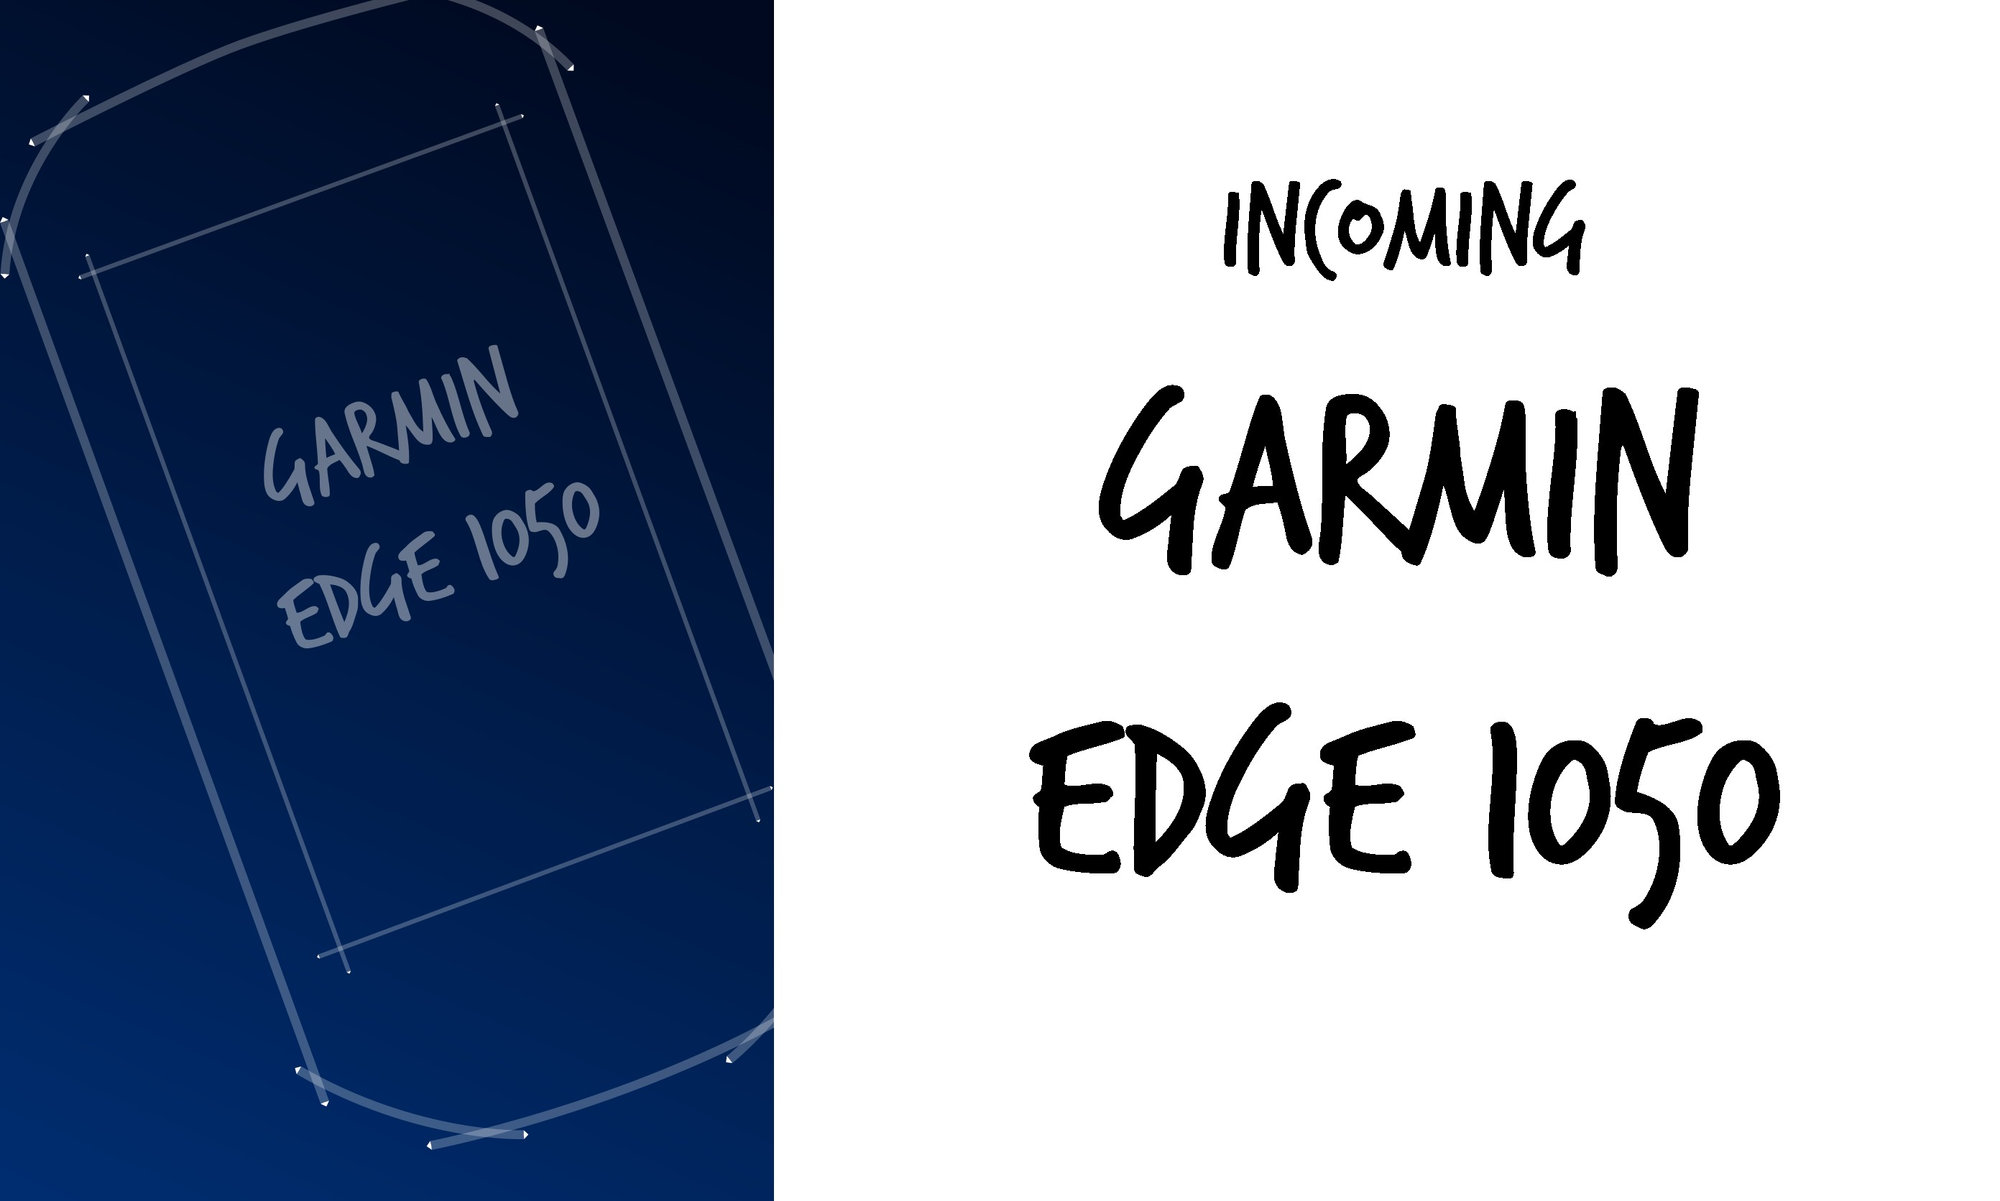 Garmin Edge 1050 - Incoming